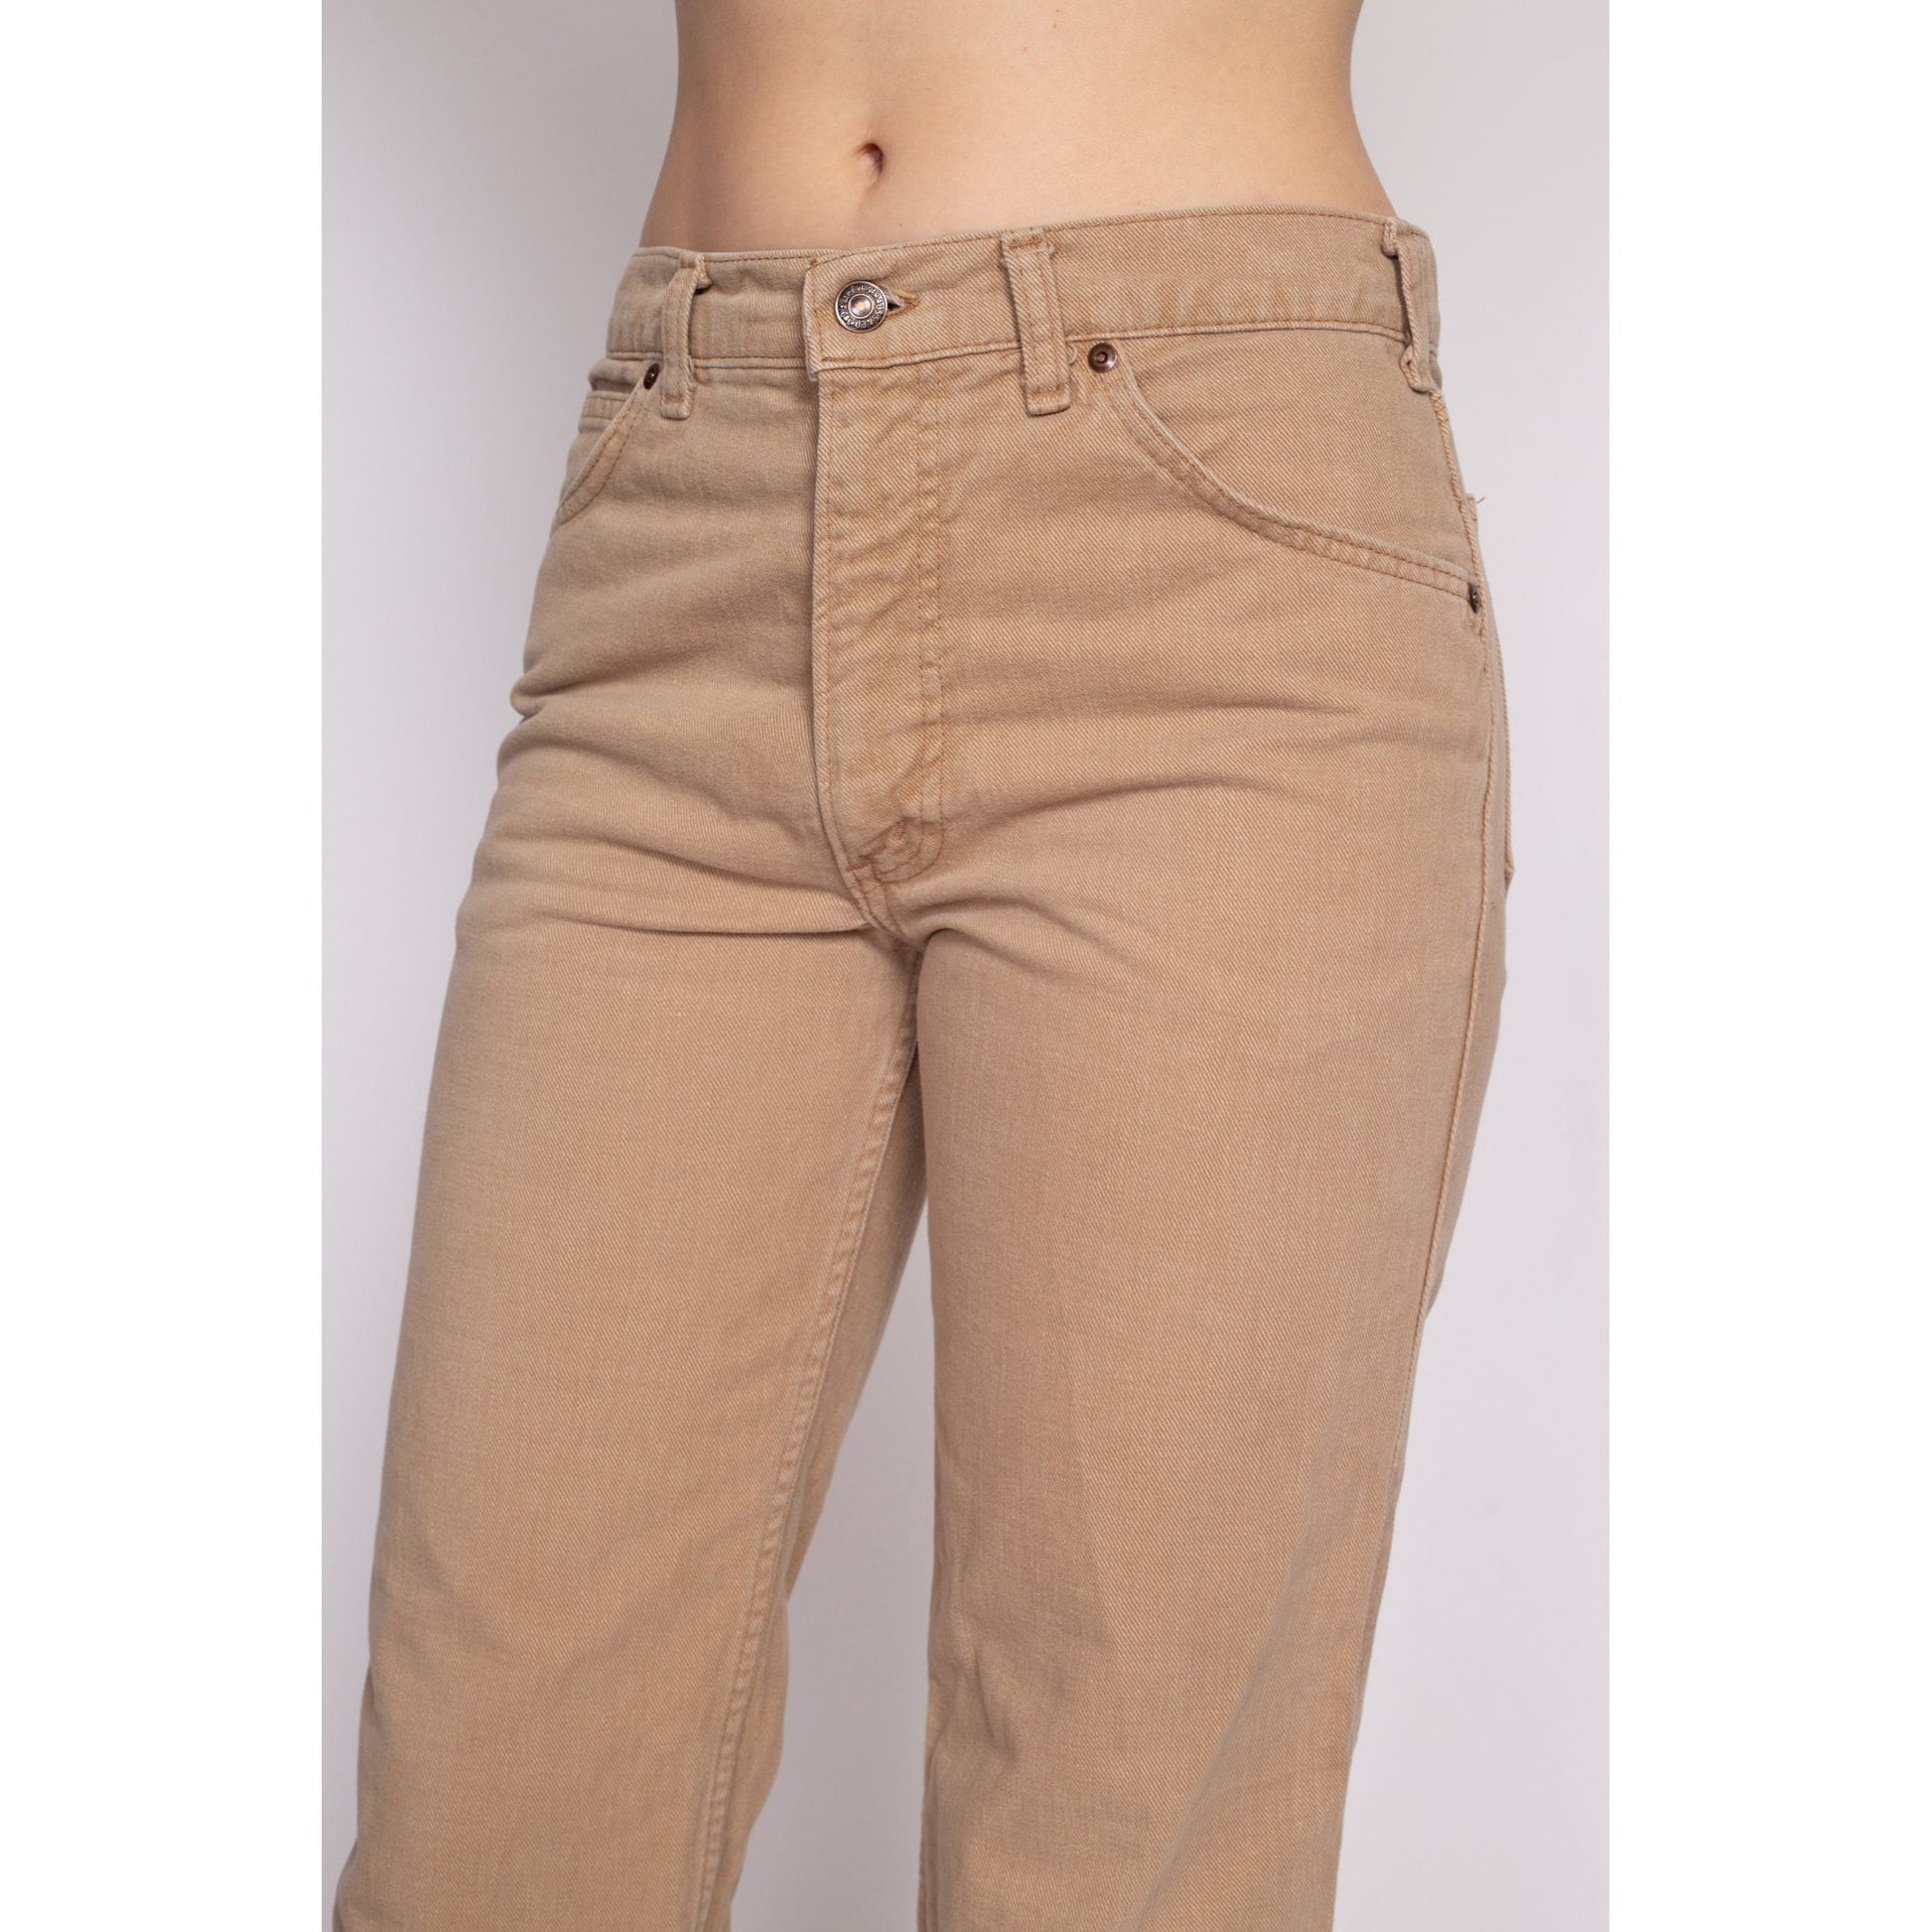 M| 70s Levis Movin' On Tan Kick Flare Jeans - Petite Medium | Vintage Boho Mid High Rise Retro Soft Denim Bootcut Pants